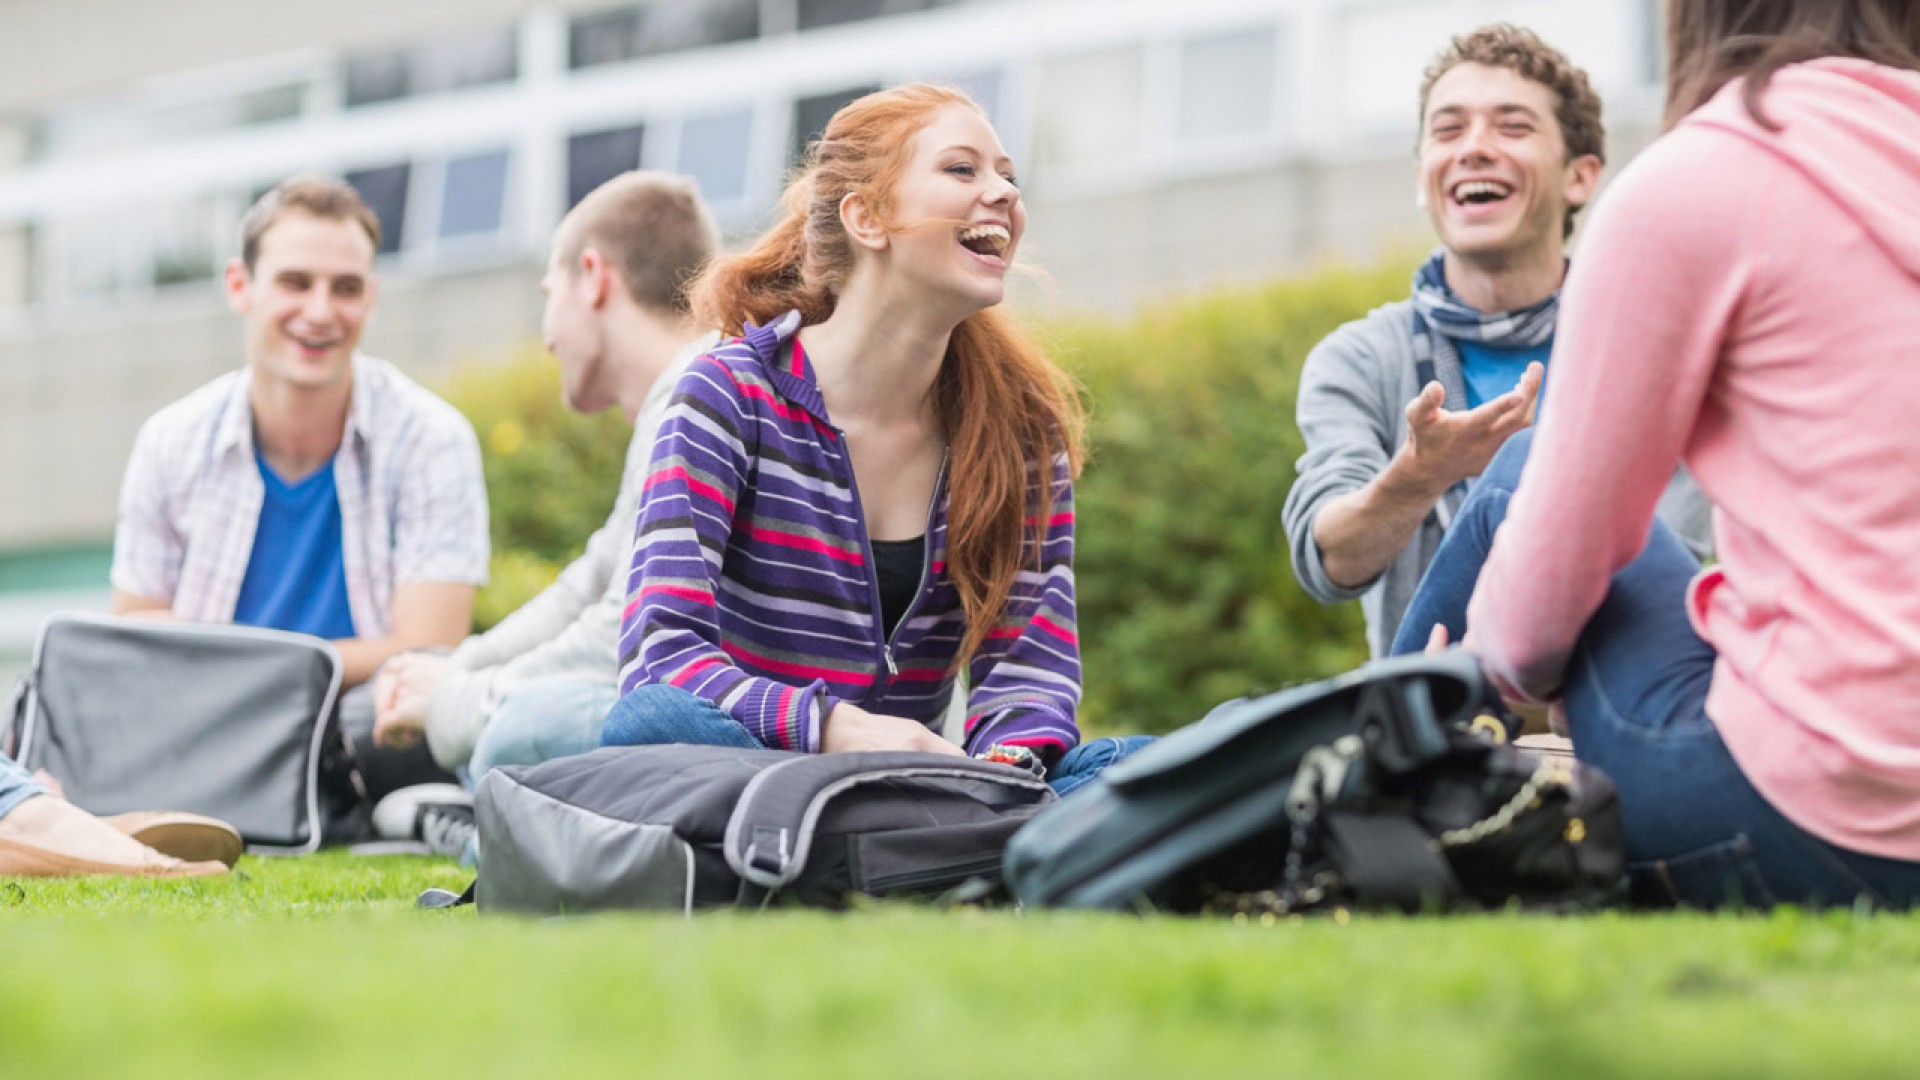 How students life. Студенты в парке. Студенты на траве. Фотосессия студентов. Студенты летом.